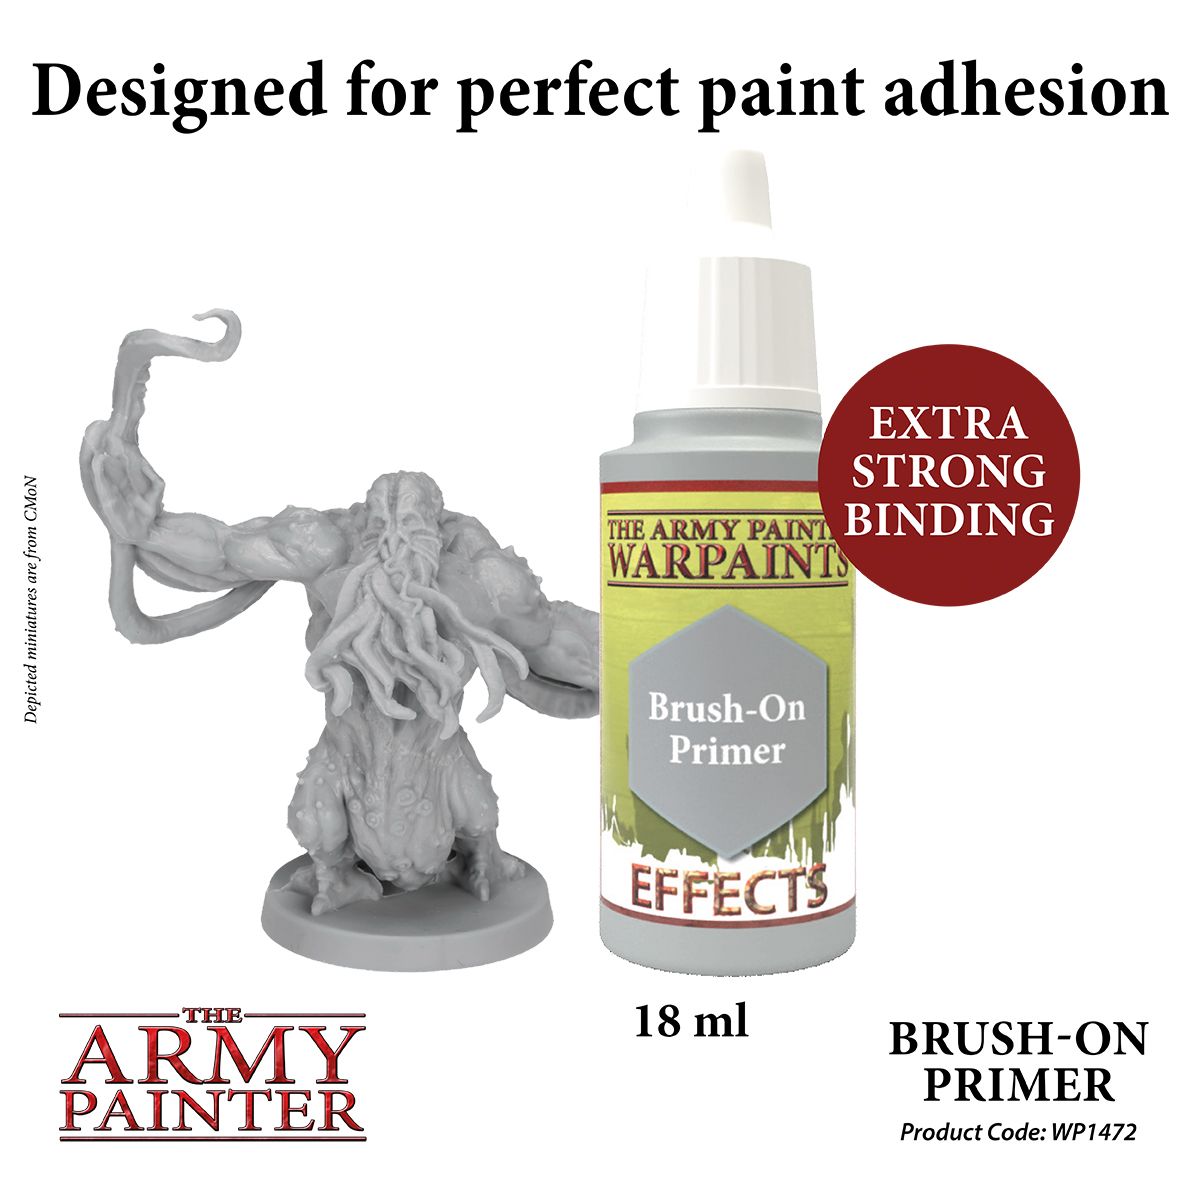 Army Painter Brush-on Primer WP1472